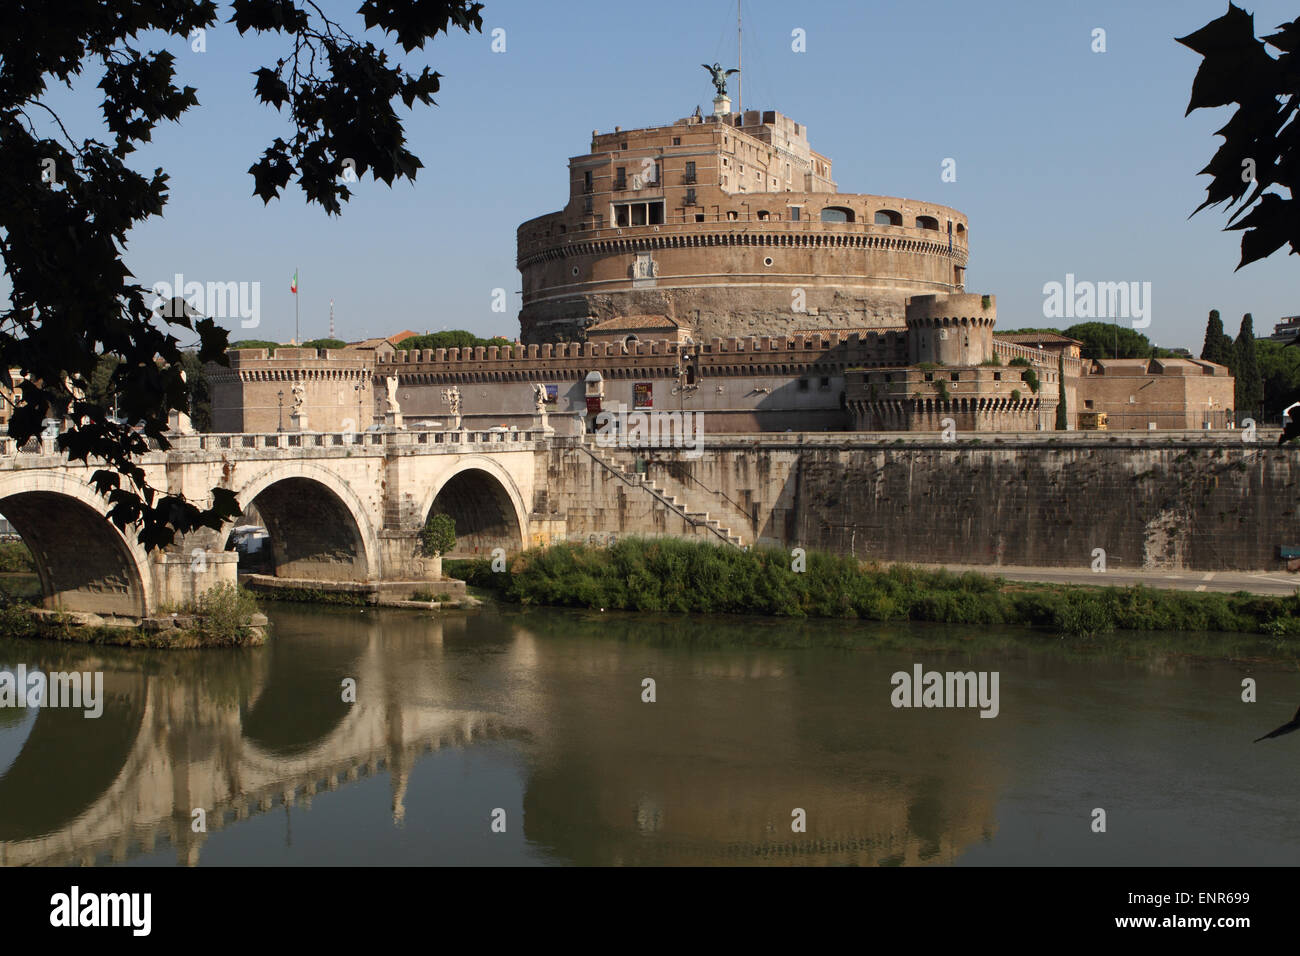 Castel Saint Angelo across the River Tiber in Rome, Italy Stock Photo